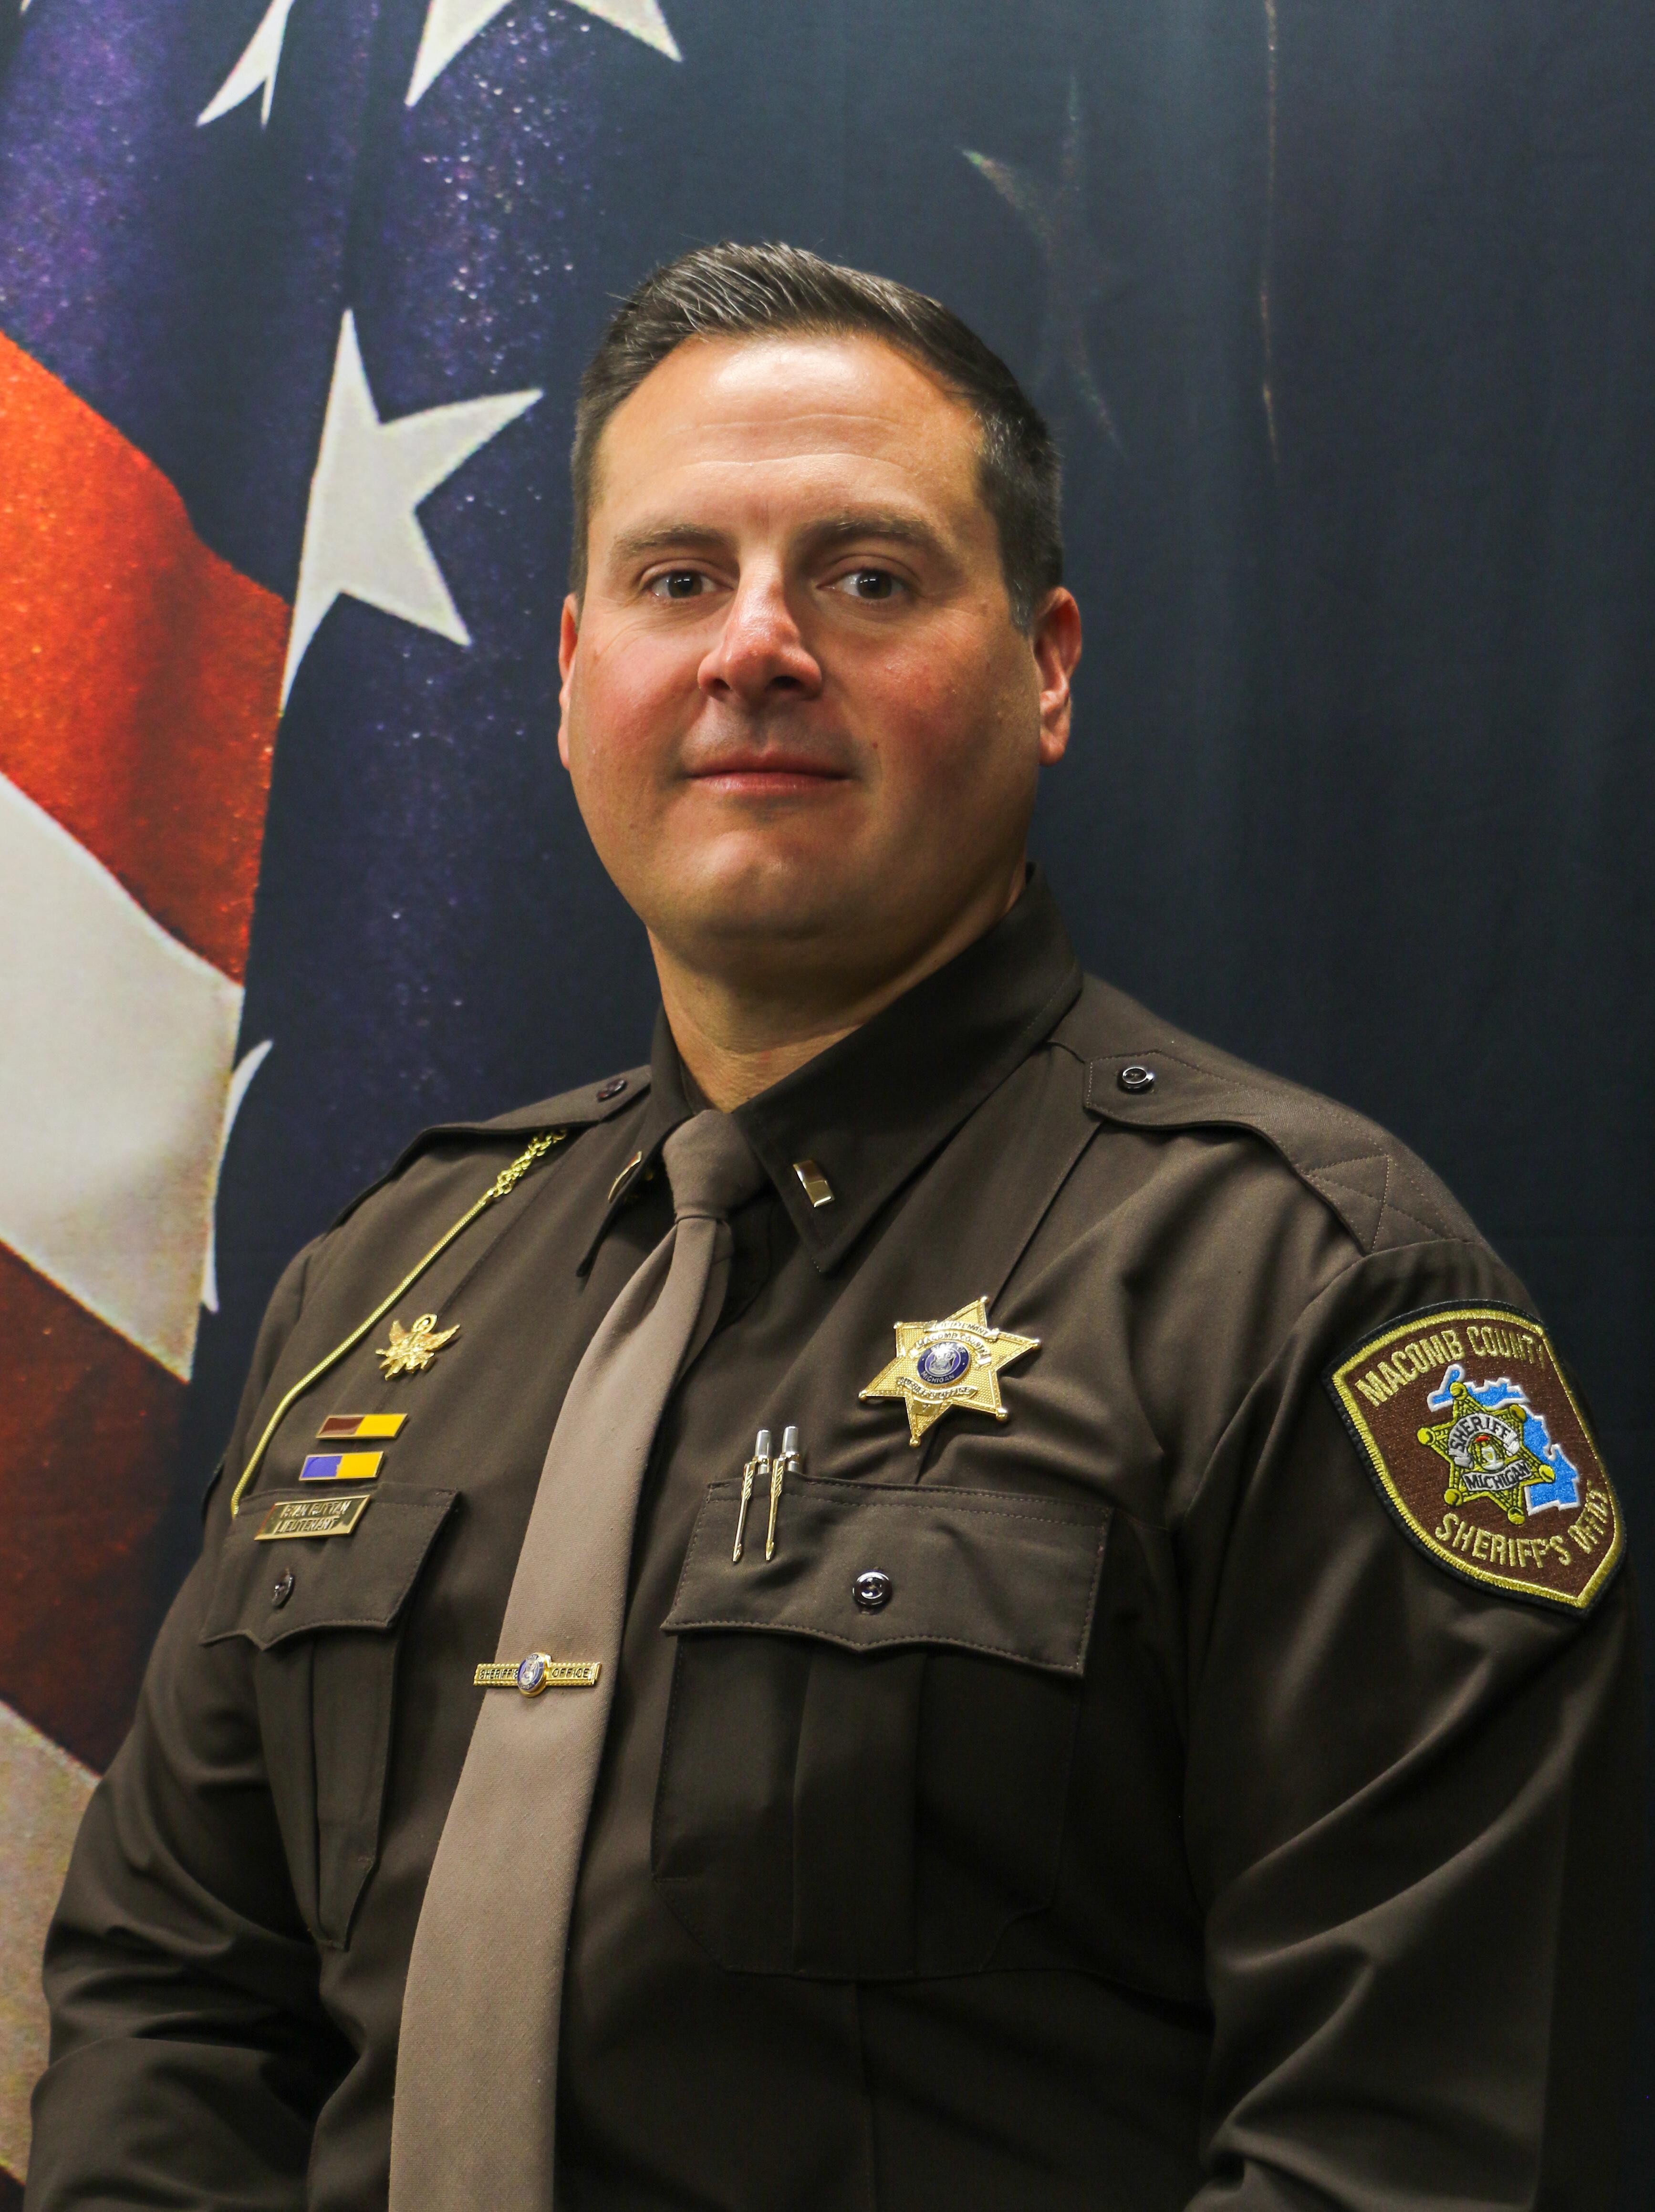 Sheriff - Lieutenant Ruttan